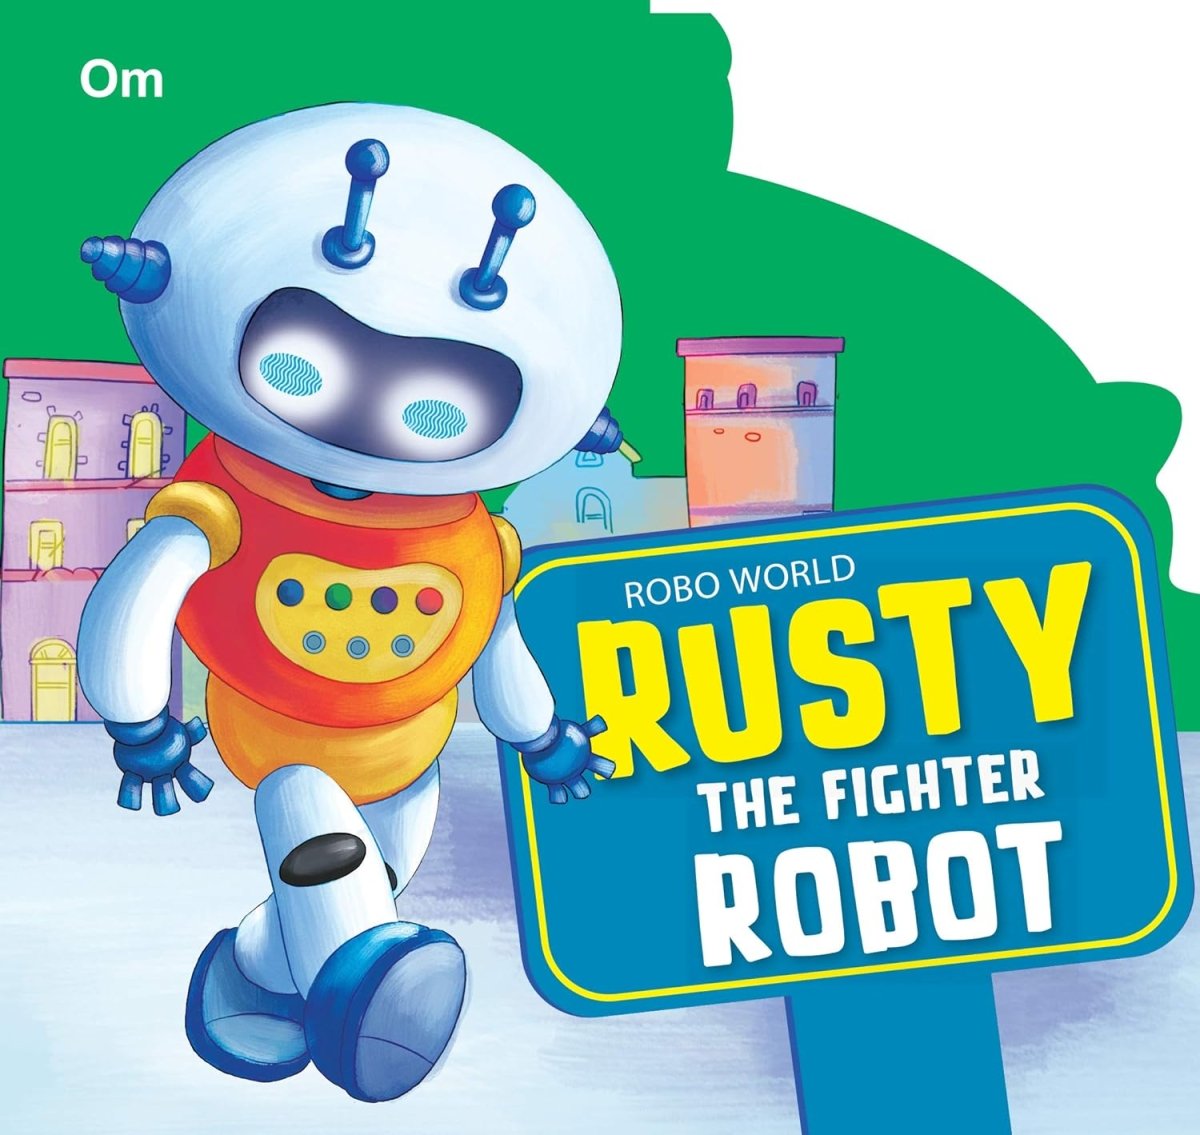 Om Books International Robo World- Rusty The Fighter Robot- Cutout Board Books - 9789352764396